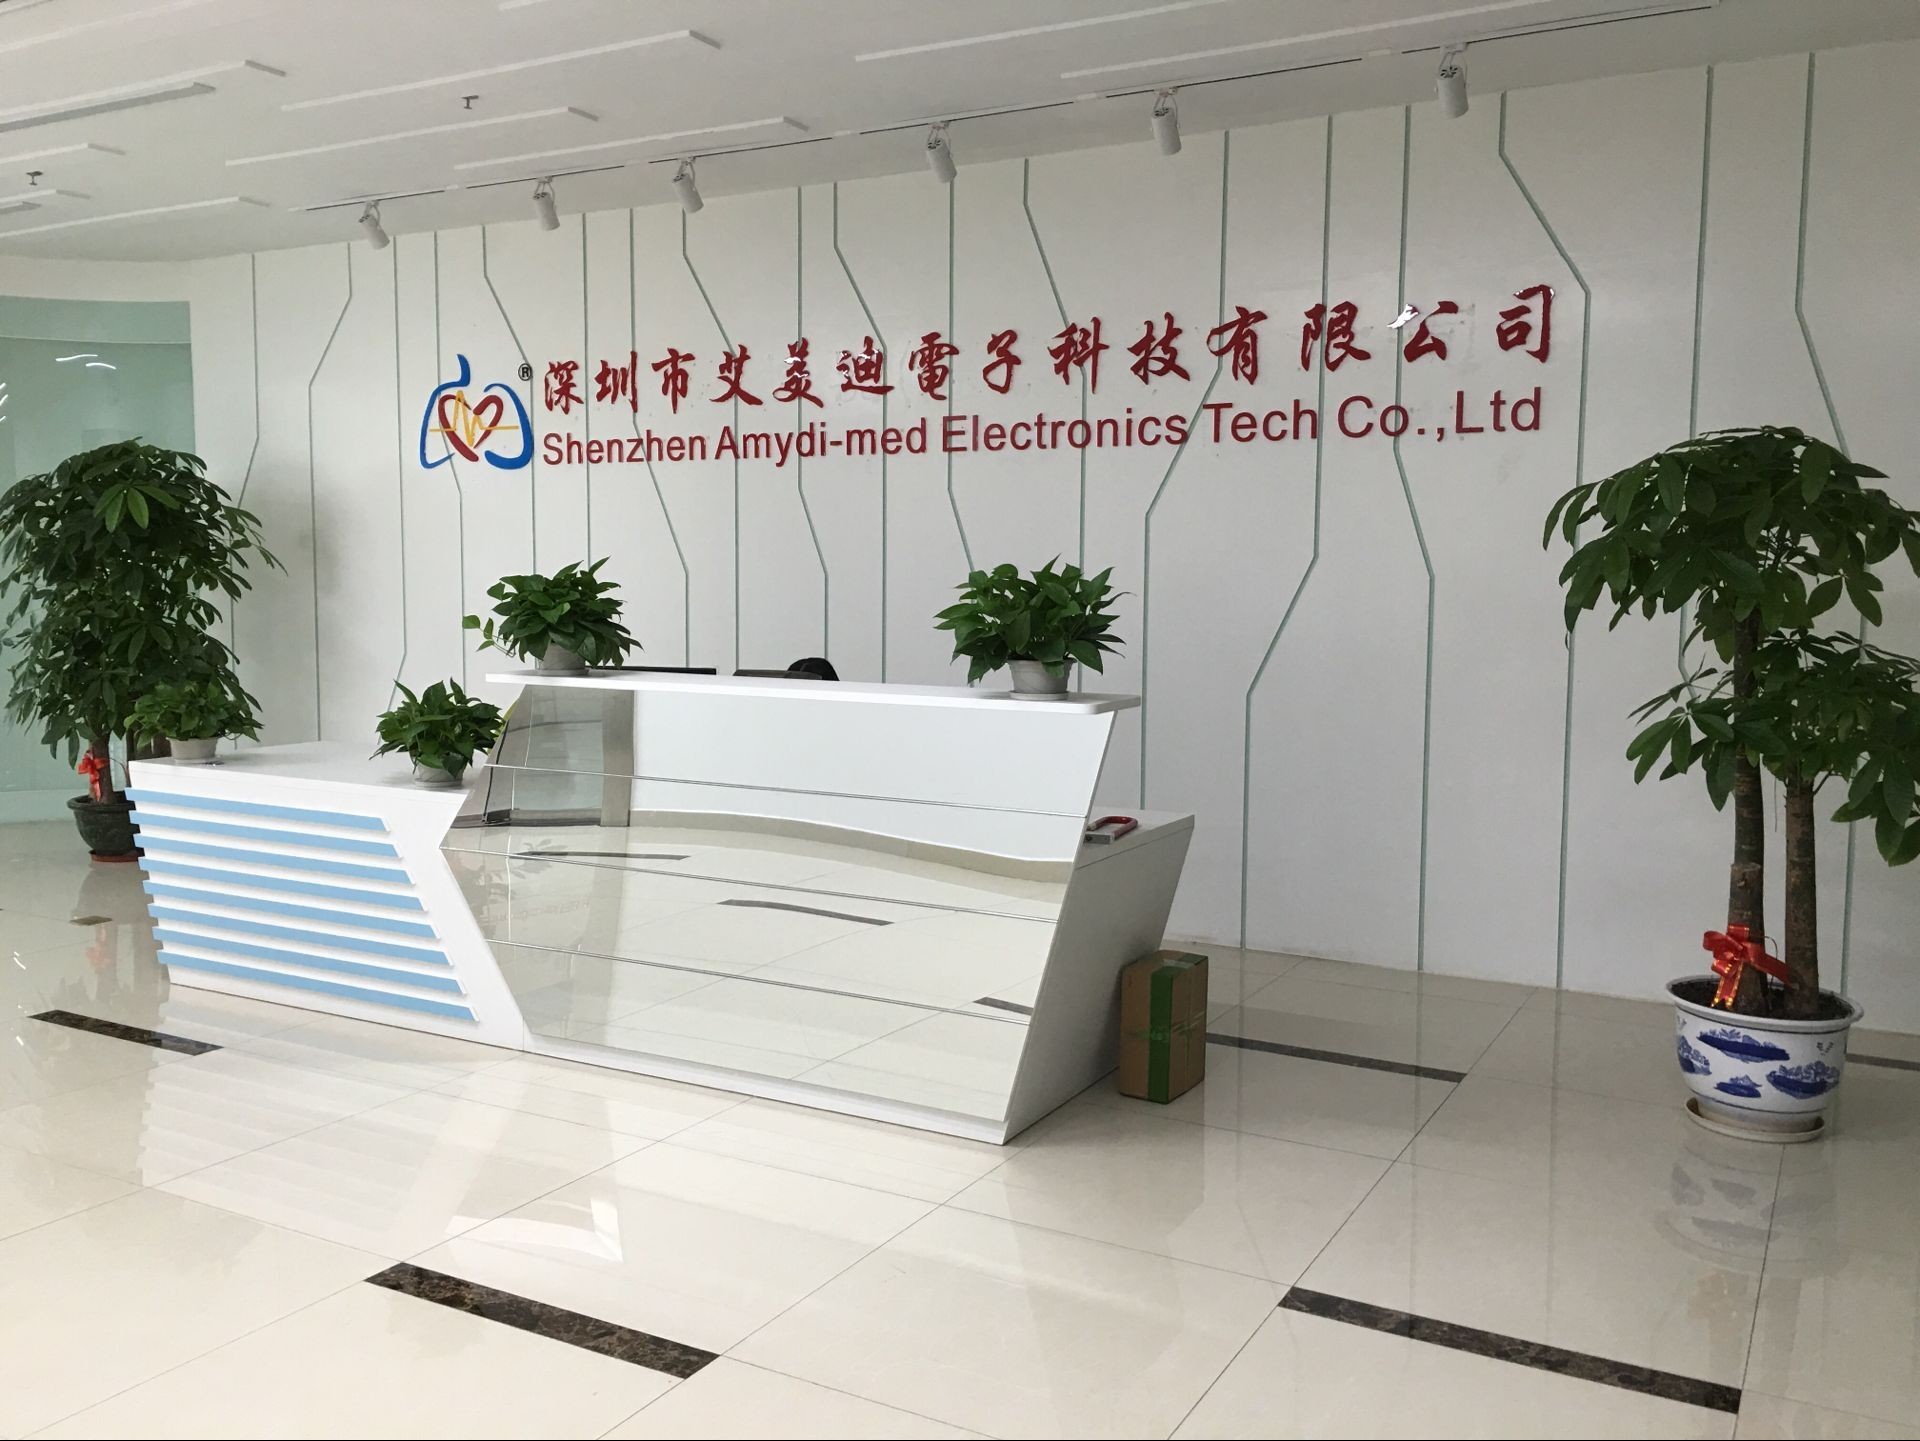 Shenzhen Amydi-Med Electronics Tech Co., Ltd.